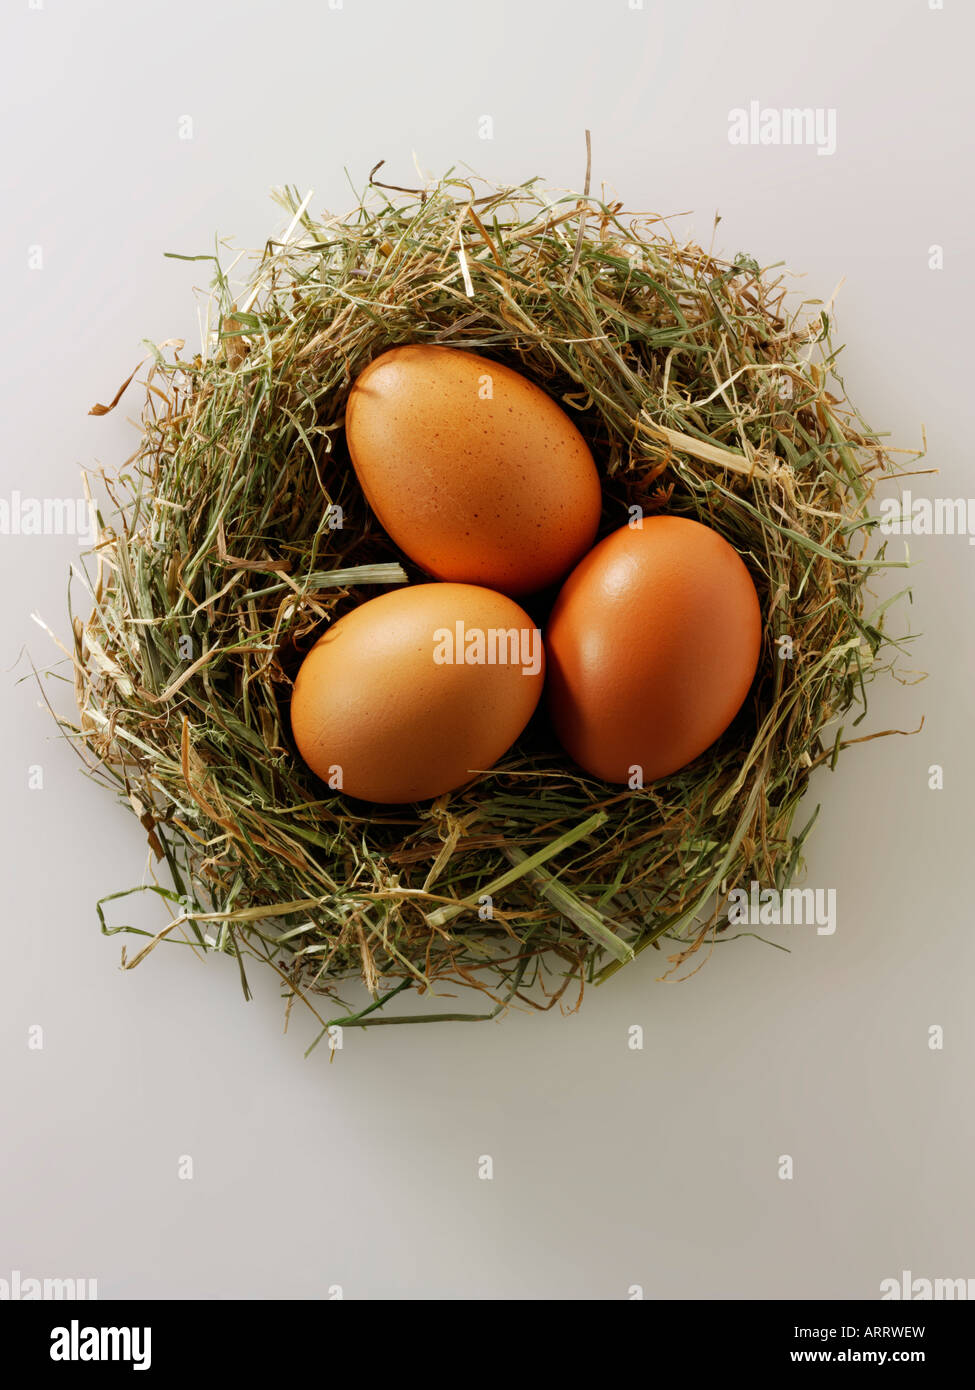 Burford huevos de pollo orgánico marrón sobre un fondo blanco. Foto de stock